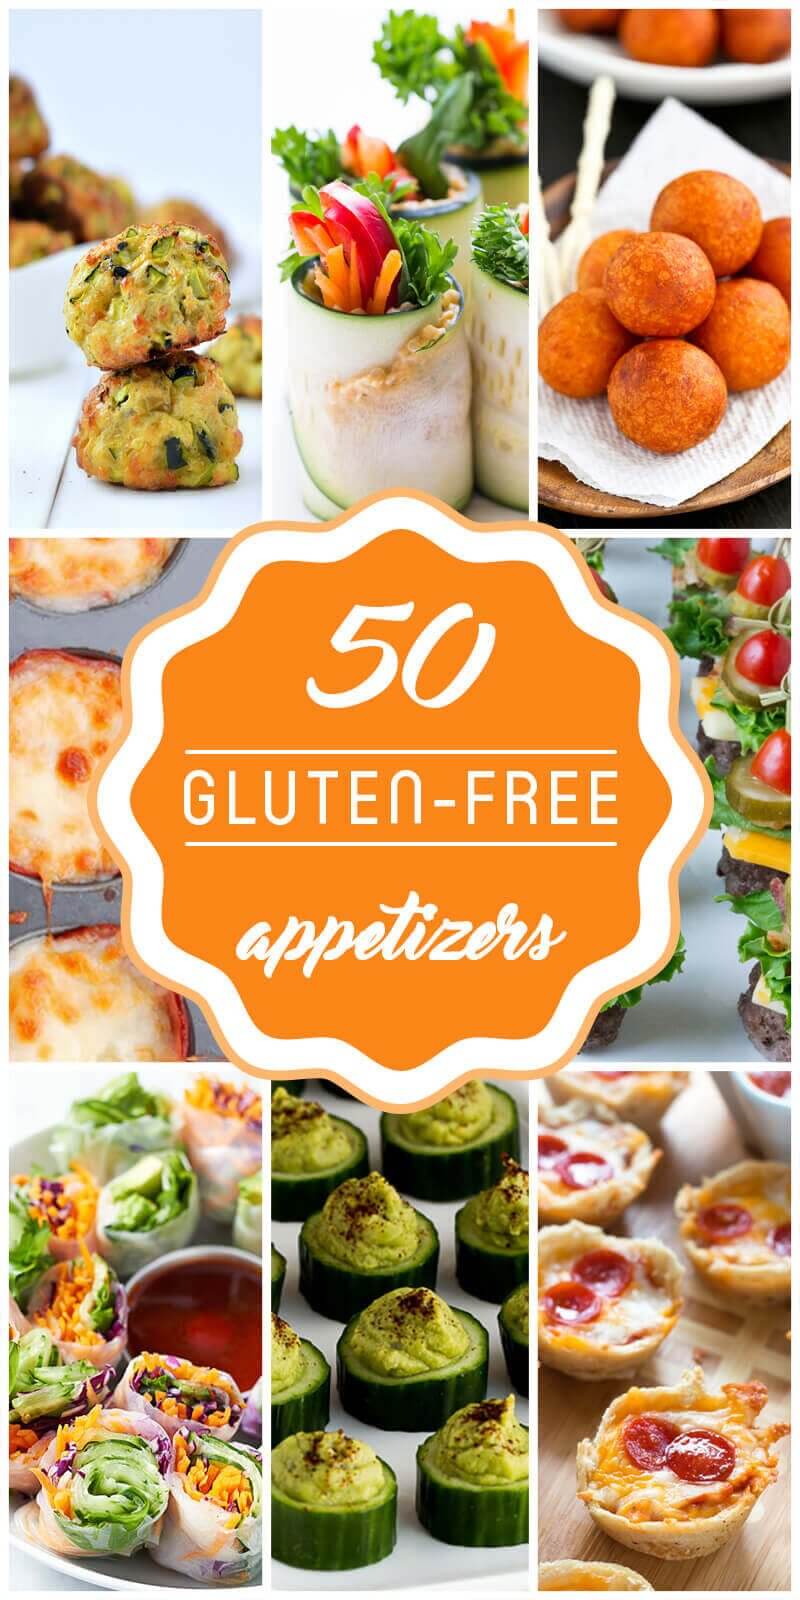 40 Easy Gluten-Free Appetizers - Best Recipes for Gluten-Free Apps